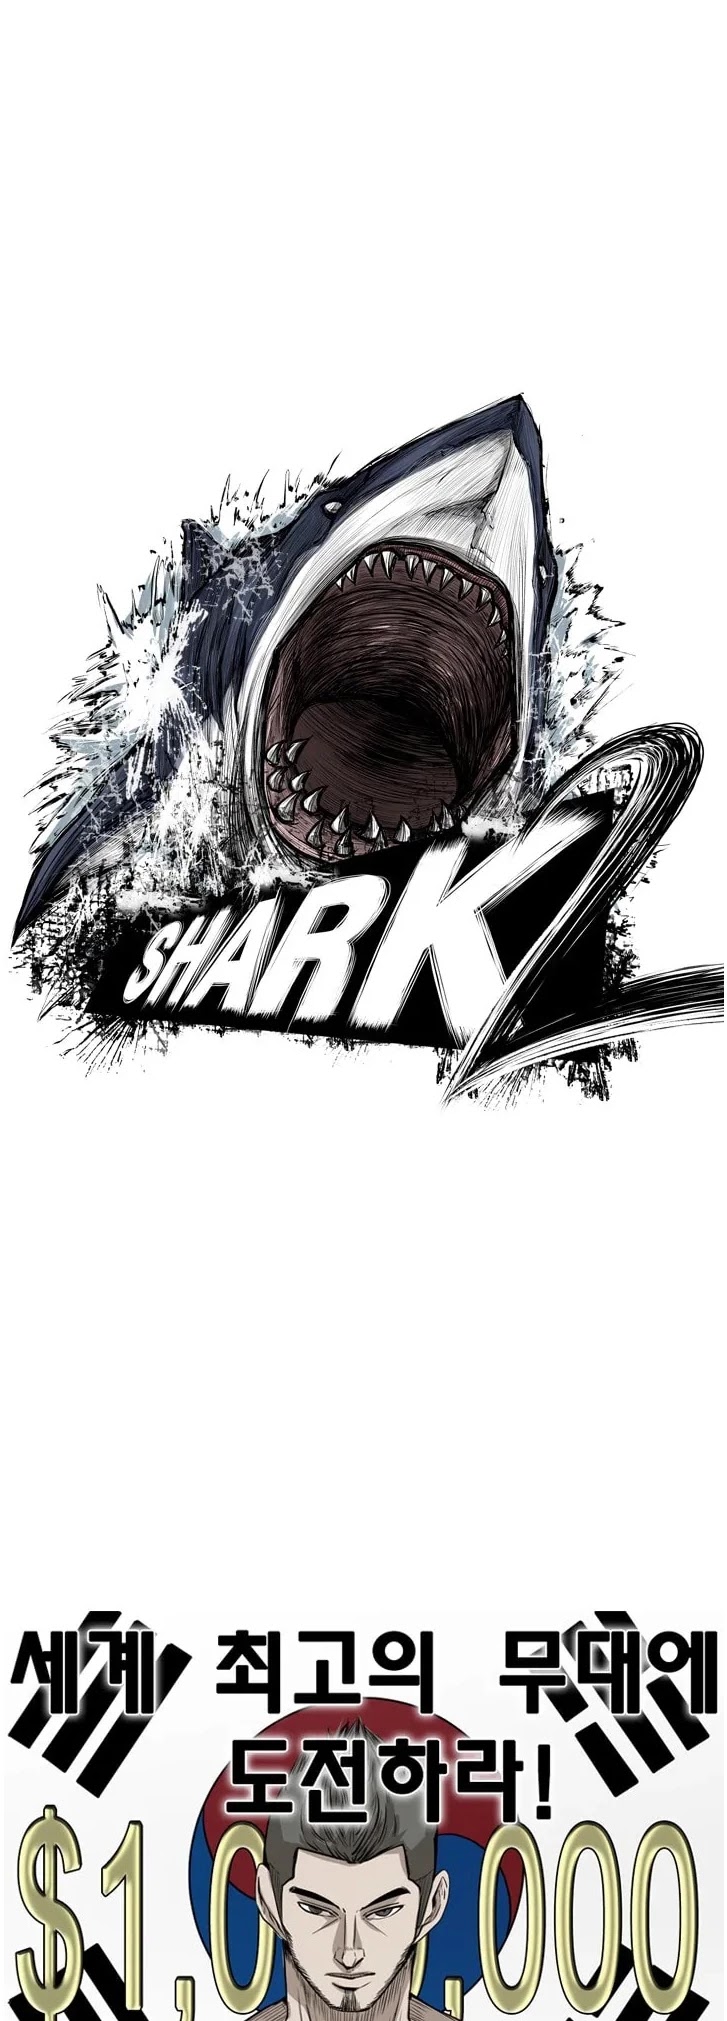 Shark - Page 2